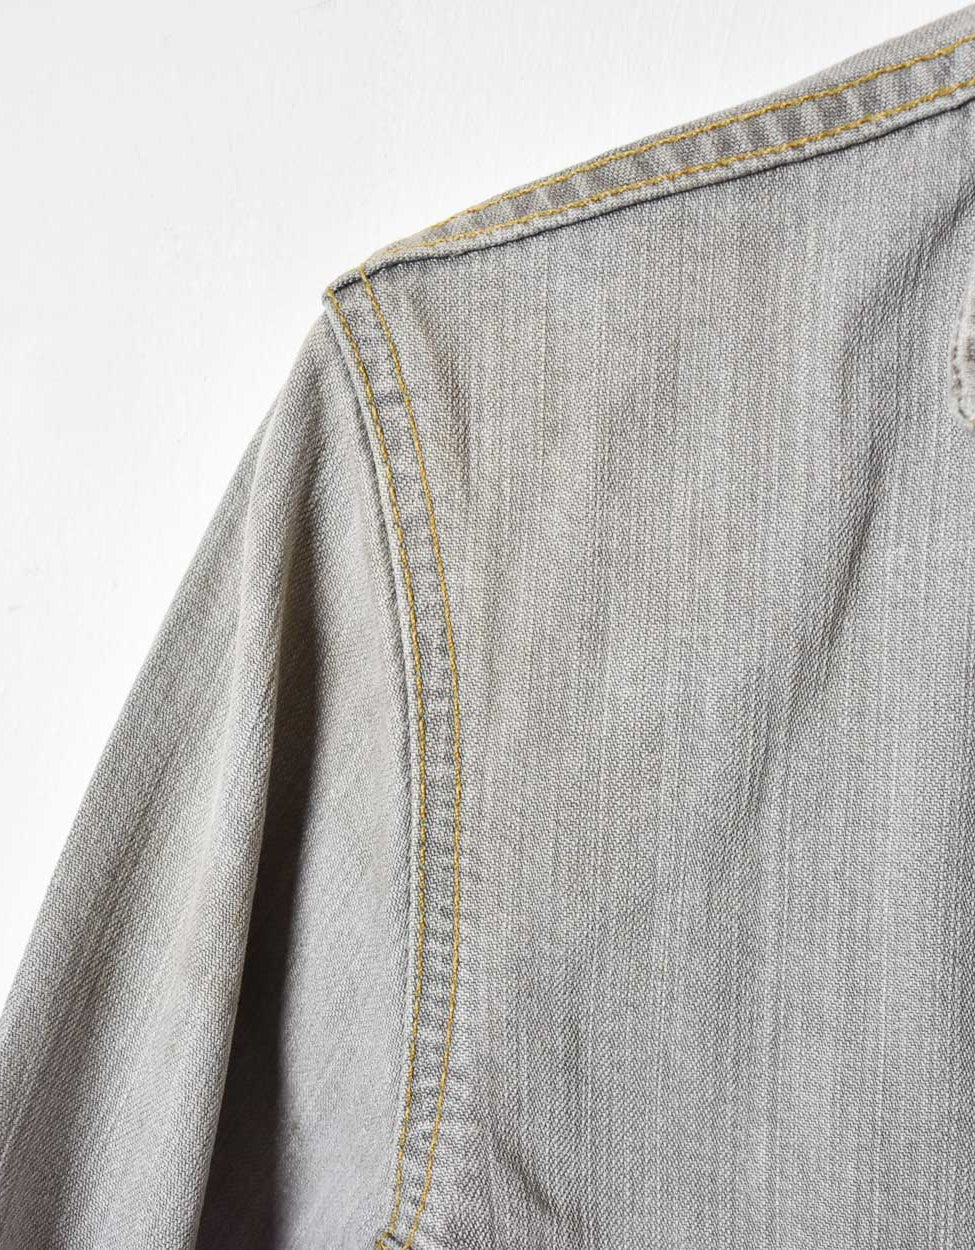 Grey Levi's Denim Dress Jacket - Medium Women's